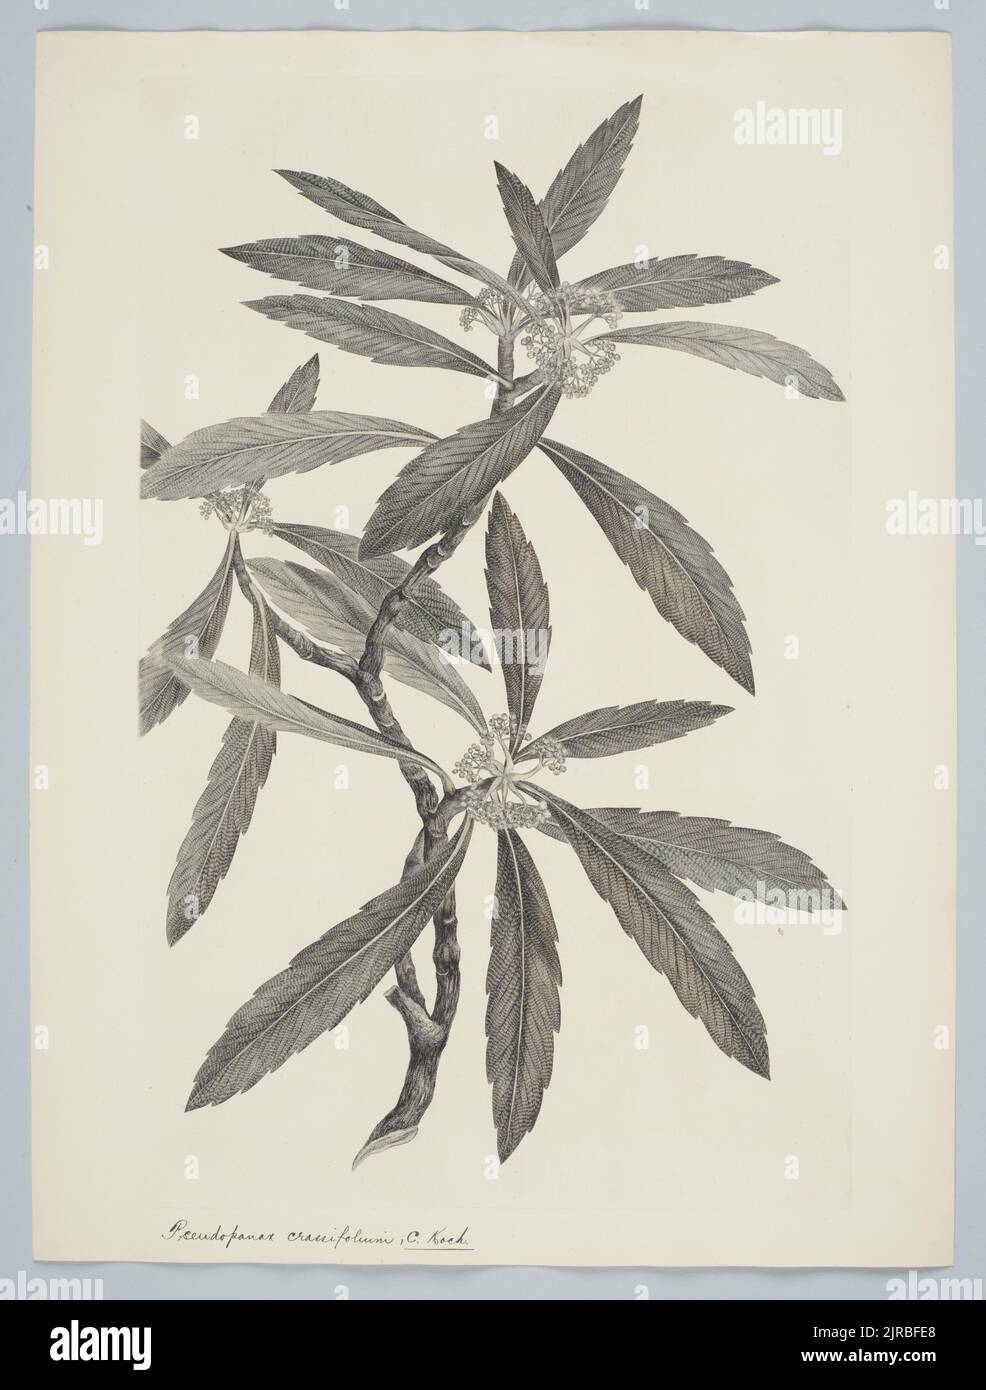 Pseudopanax crassifolius (Solander ex Cunningham) C. Koch in C. Koch & Fintelmann, 1895, United Kingdom, by Sydney Parkinson. Gift of the British Museum, 1895. Stock Photo